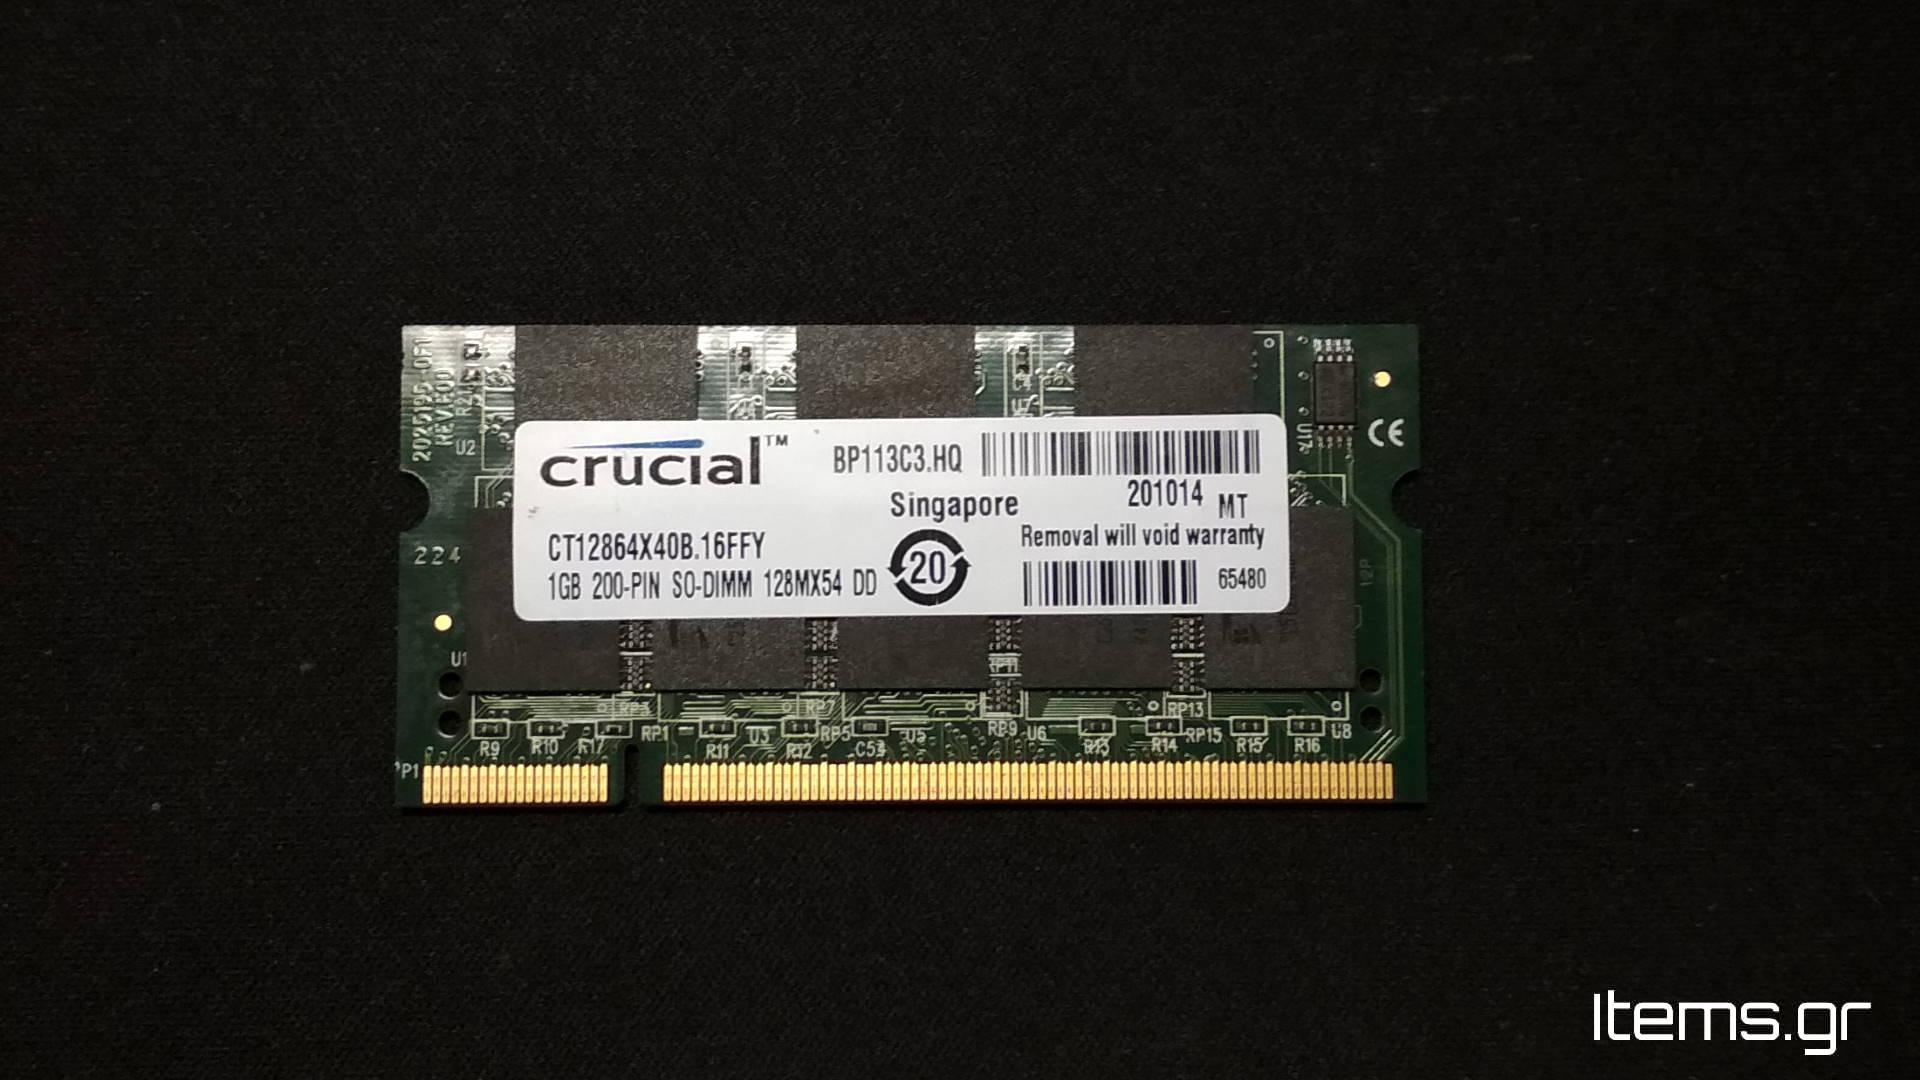 Crucial 1GB PC-3200 DDR 400MHz CL3 200-pin SoDIMM RAM